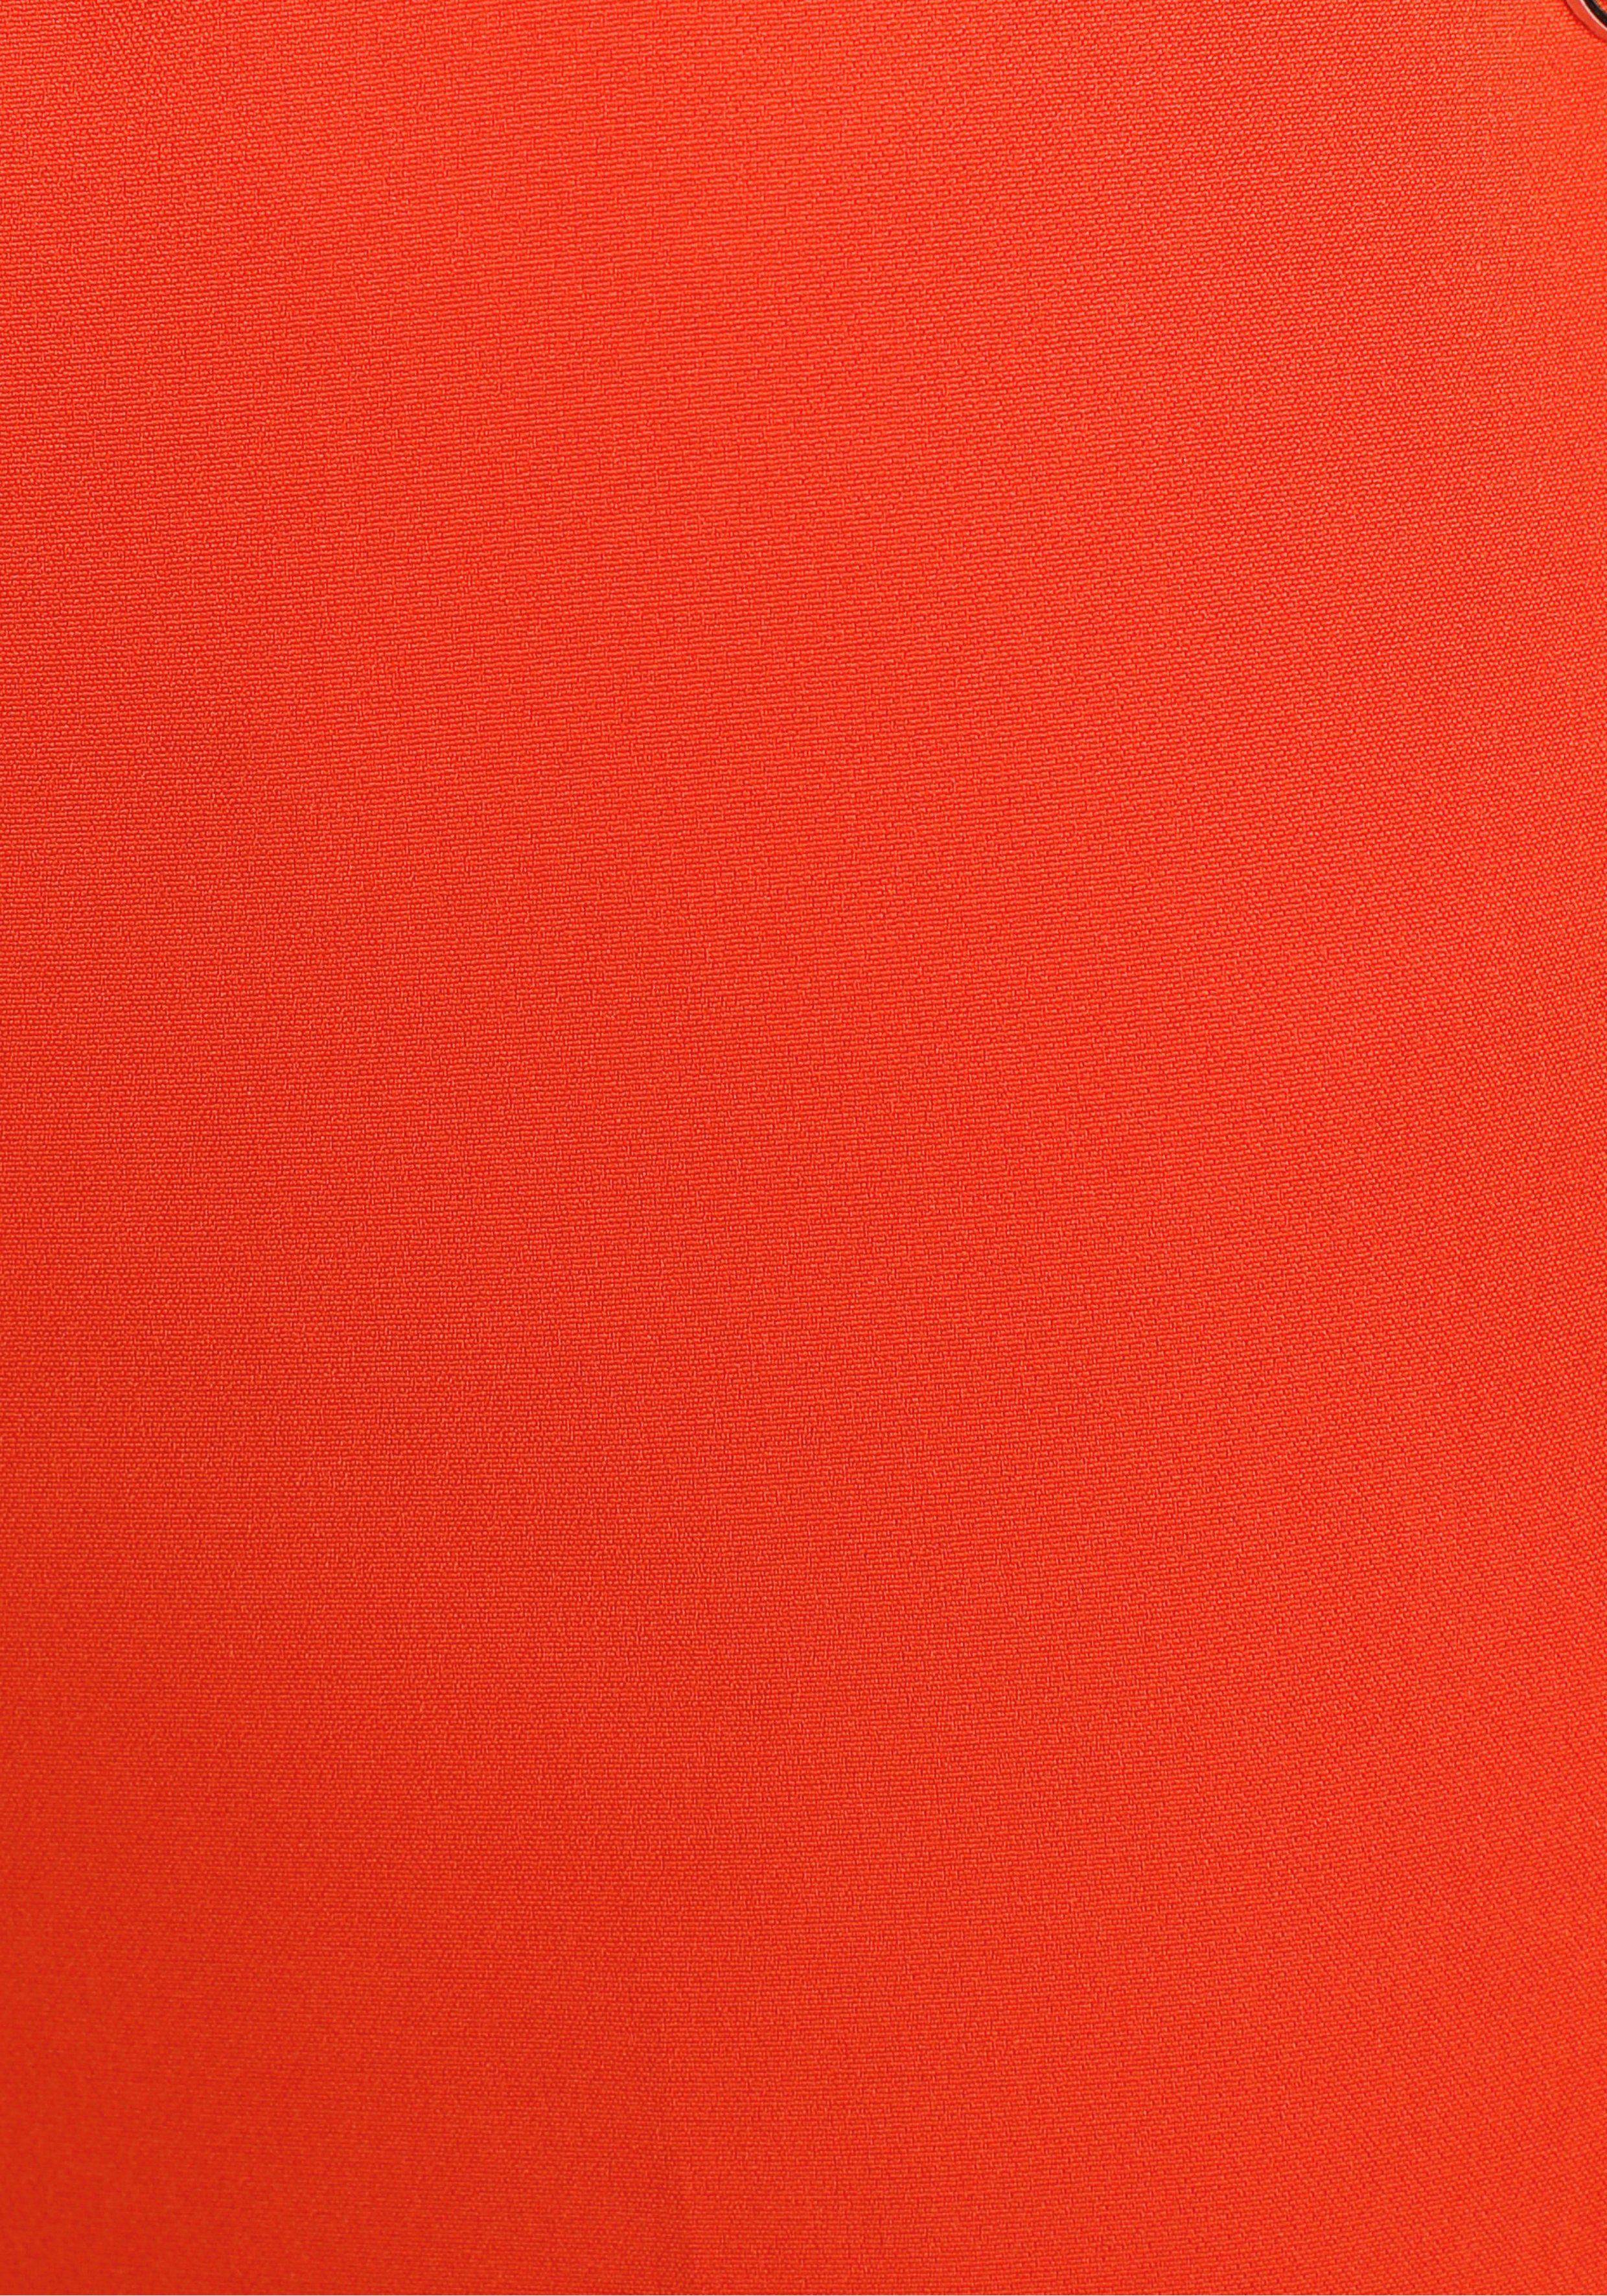 Tamaris Anzughose (Hose in aus Material) Trendfarben orange nachhaltigem